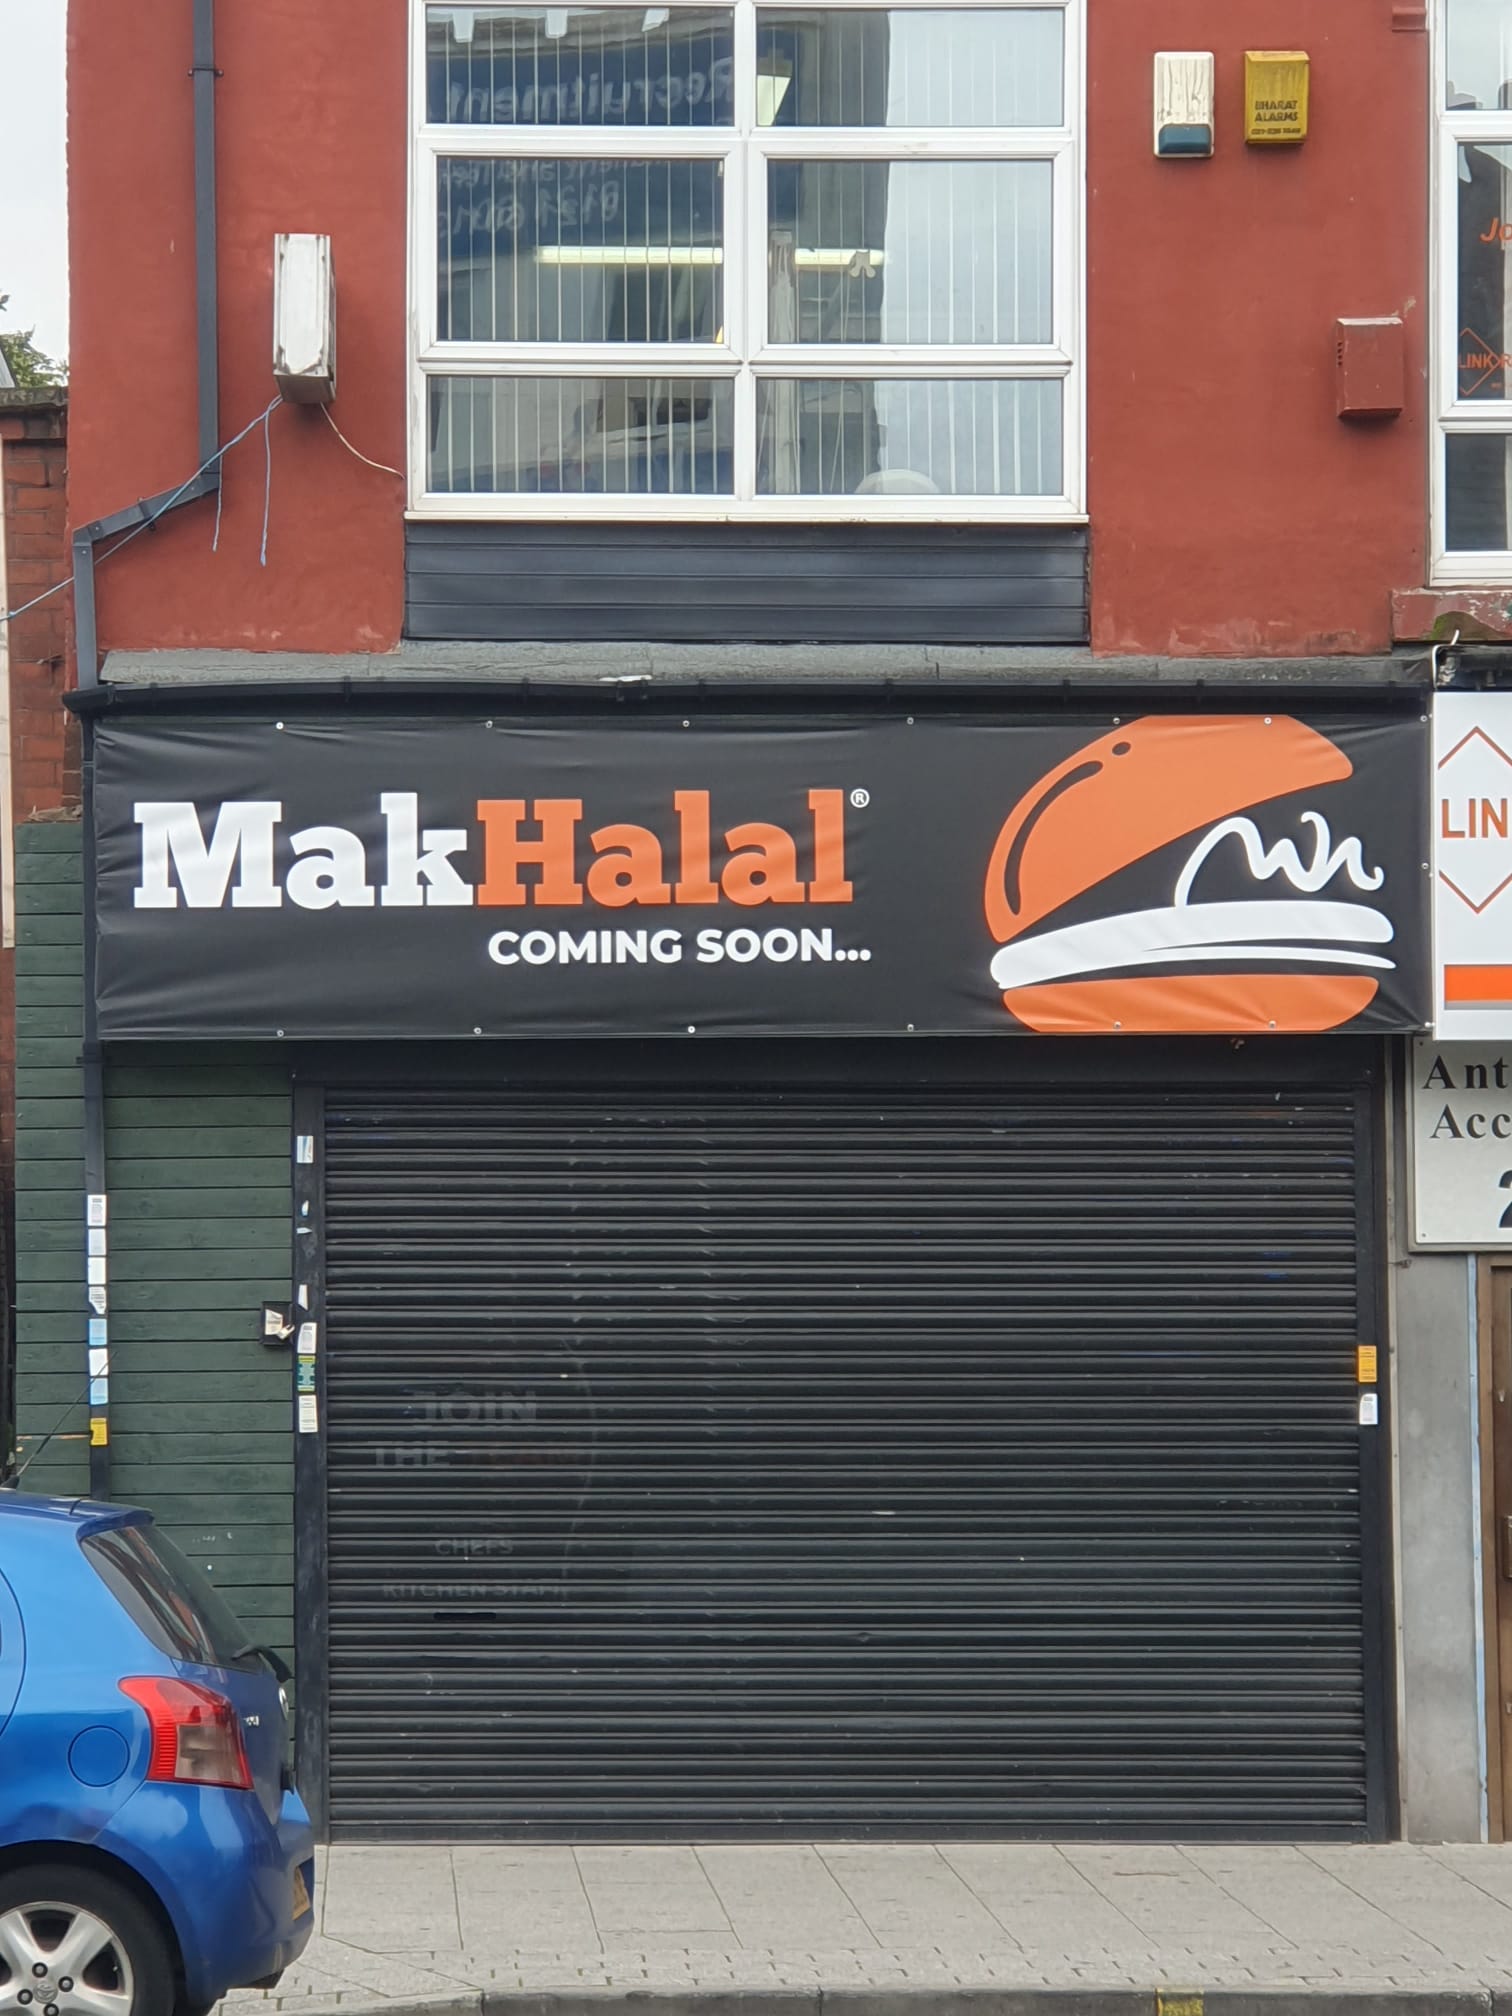 New business Mak Halal coming soon